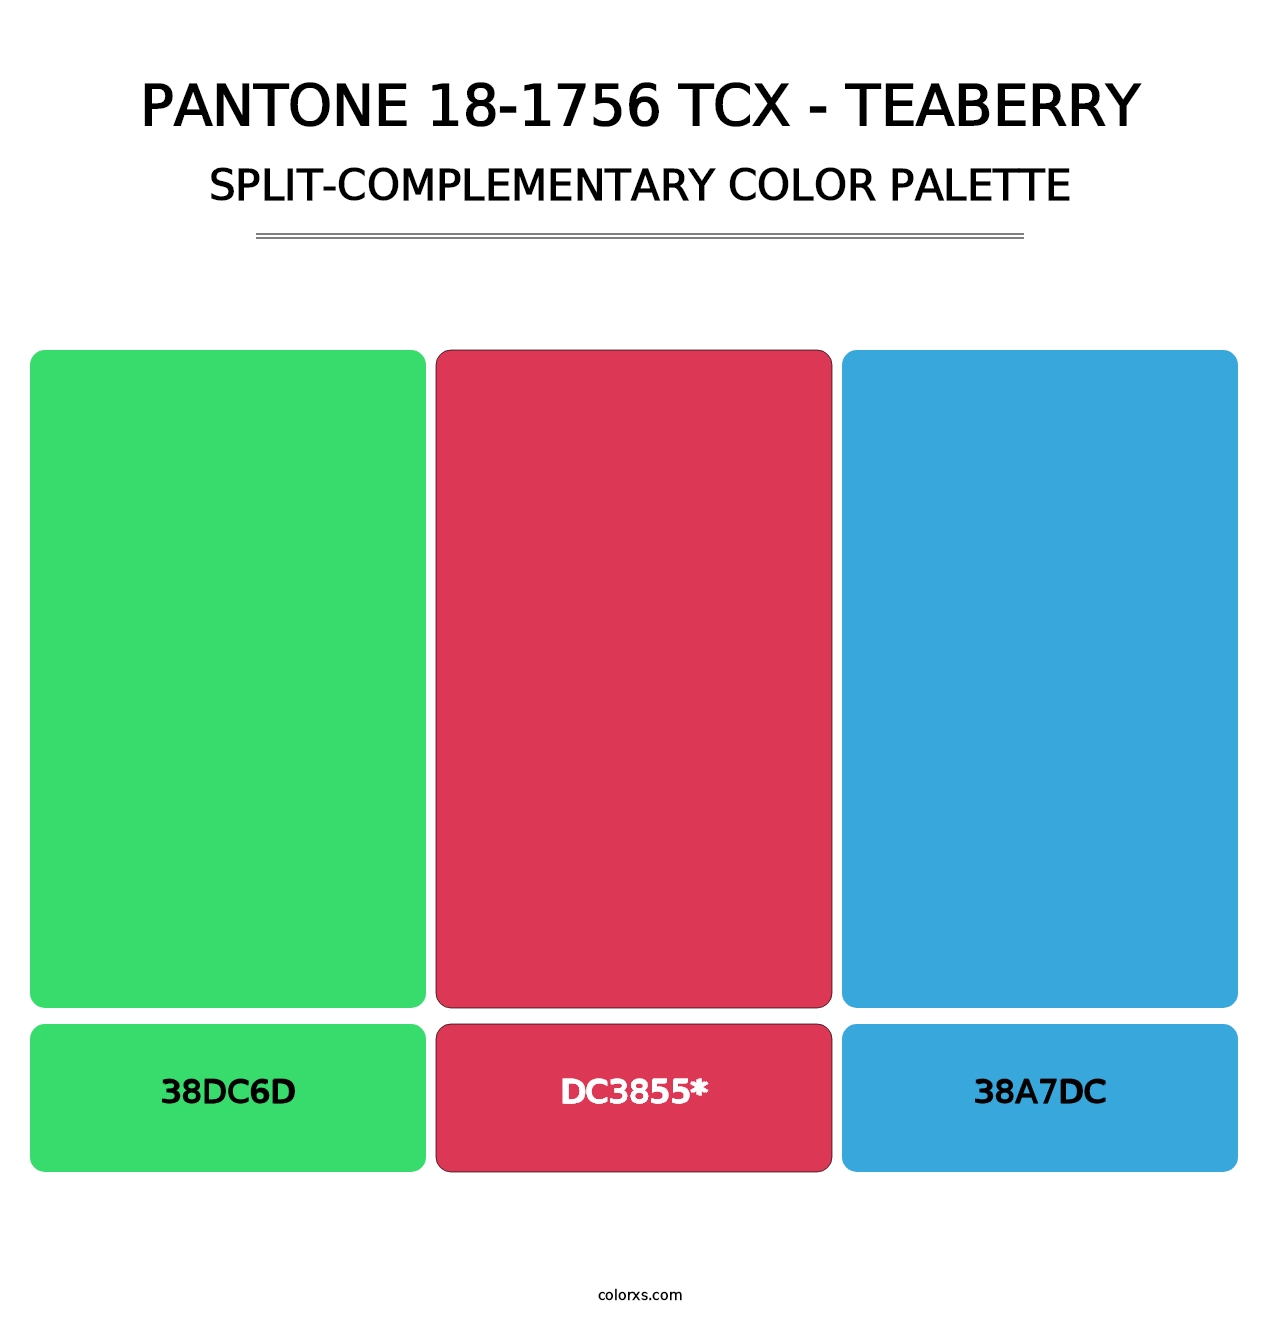 PANTONE 18-1756 TCX - Teaberry - Split-Complementary Color Palette